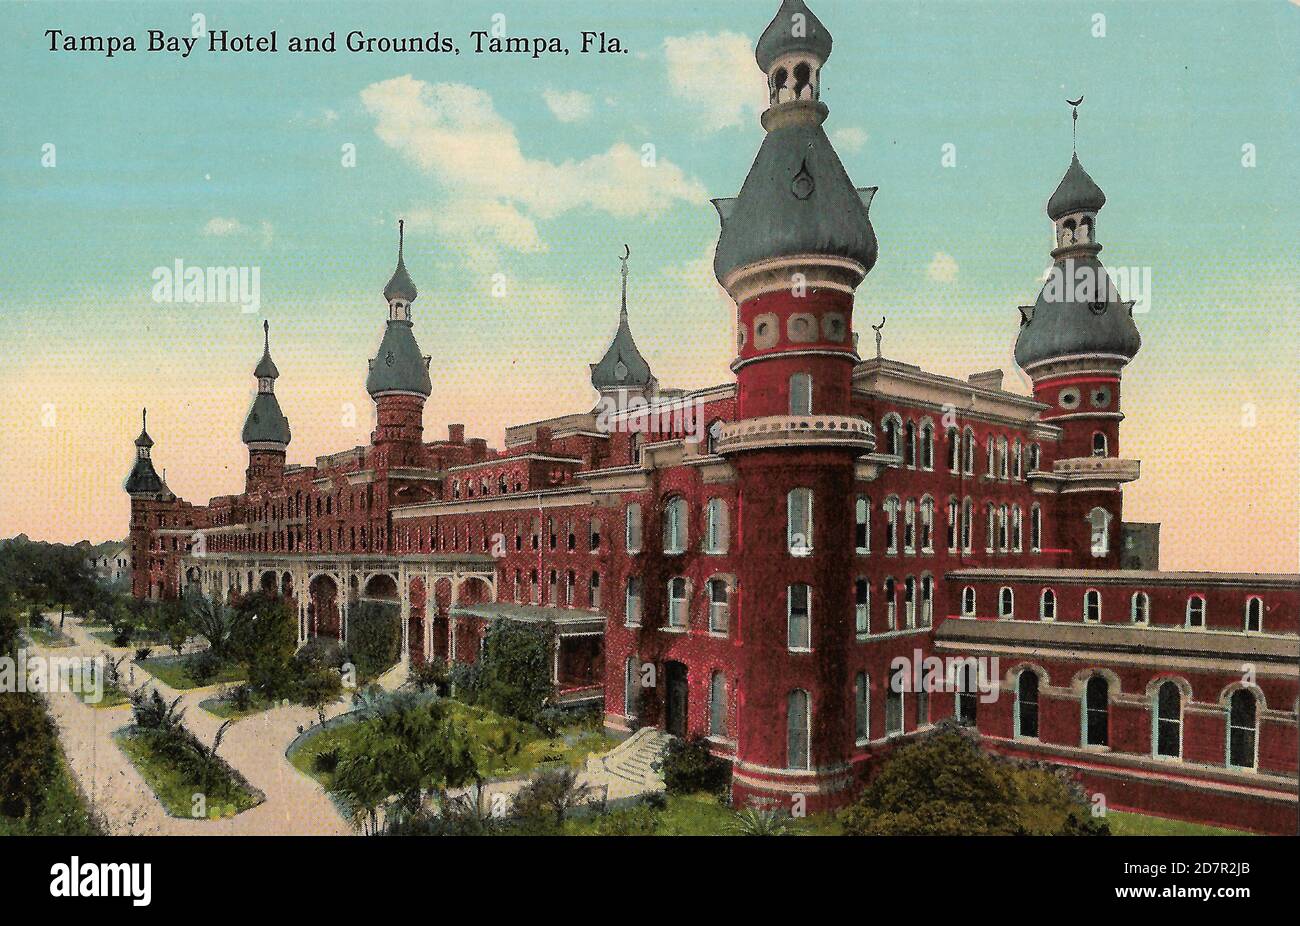 Tampa Bay Hotel and Grounds, Tampa Bay, Florida Stock Photo